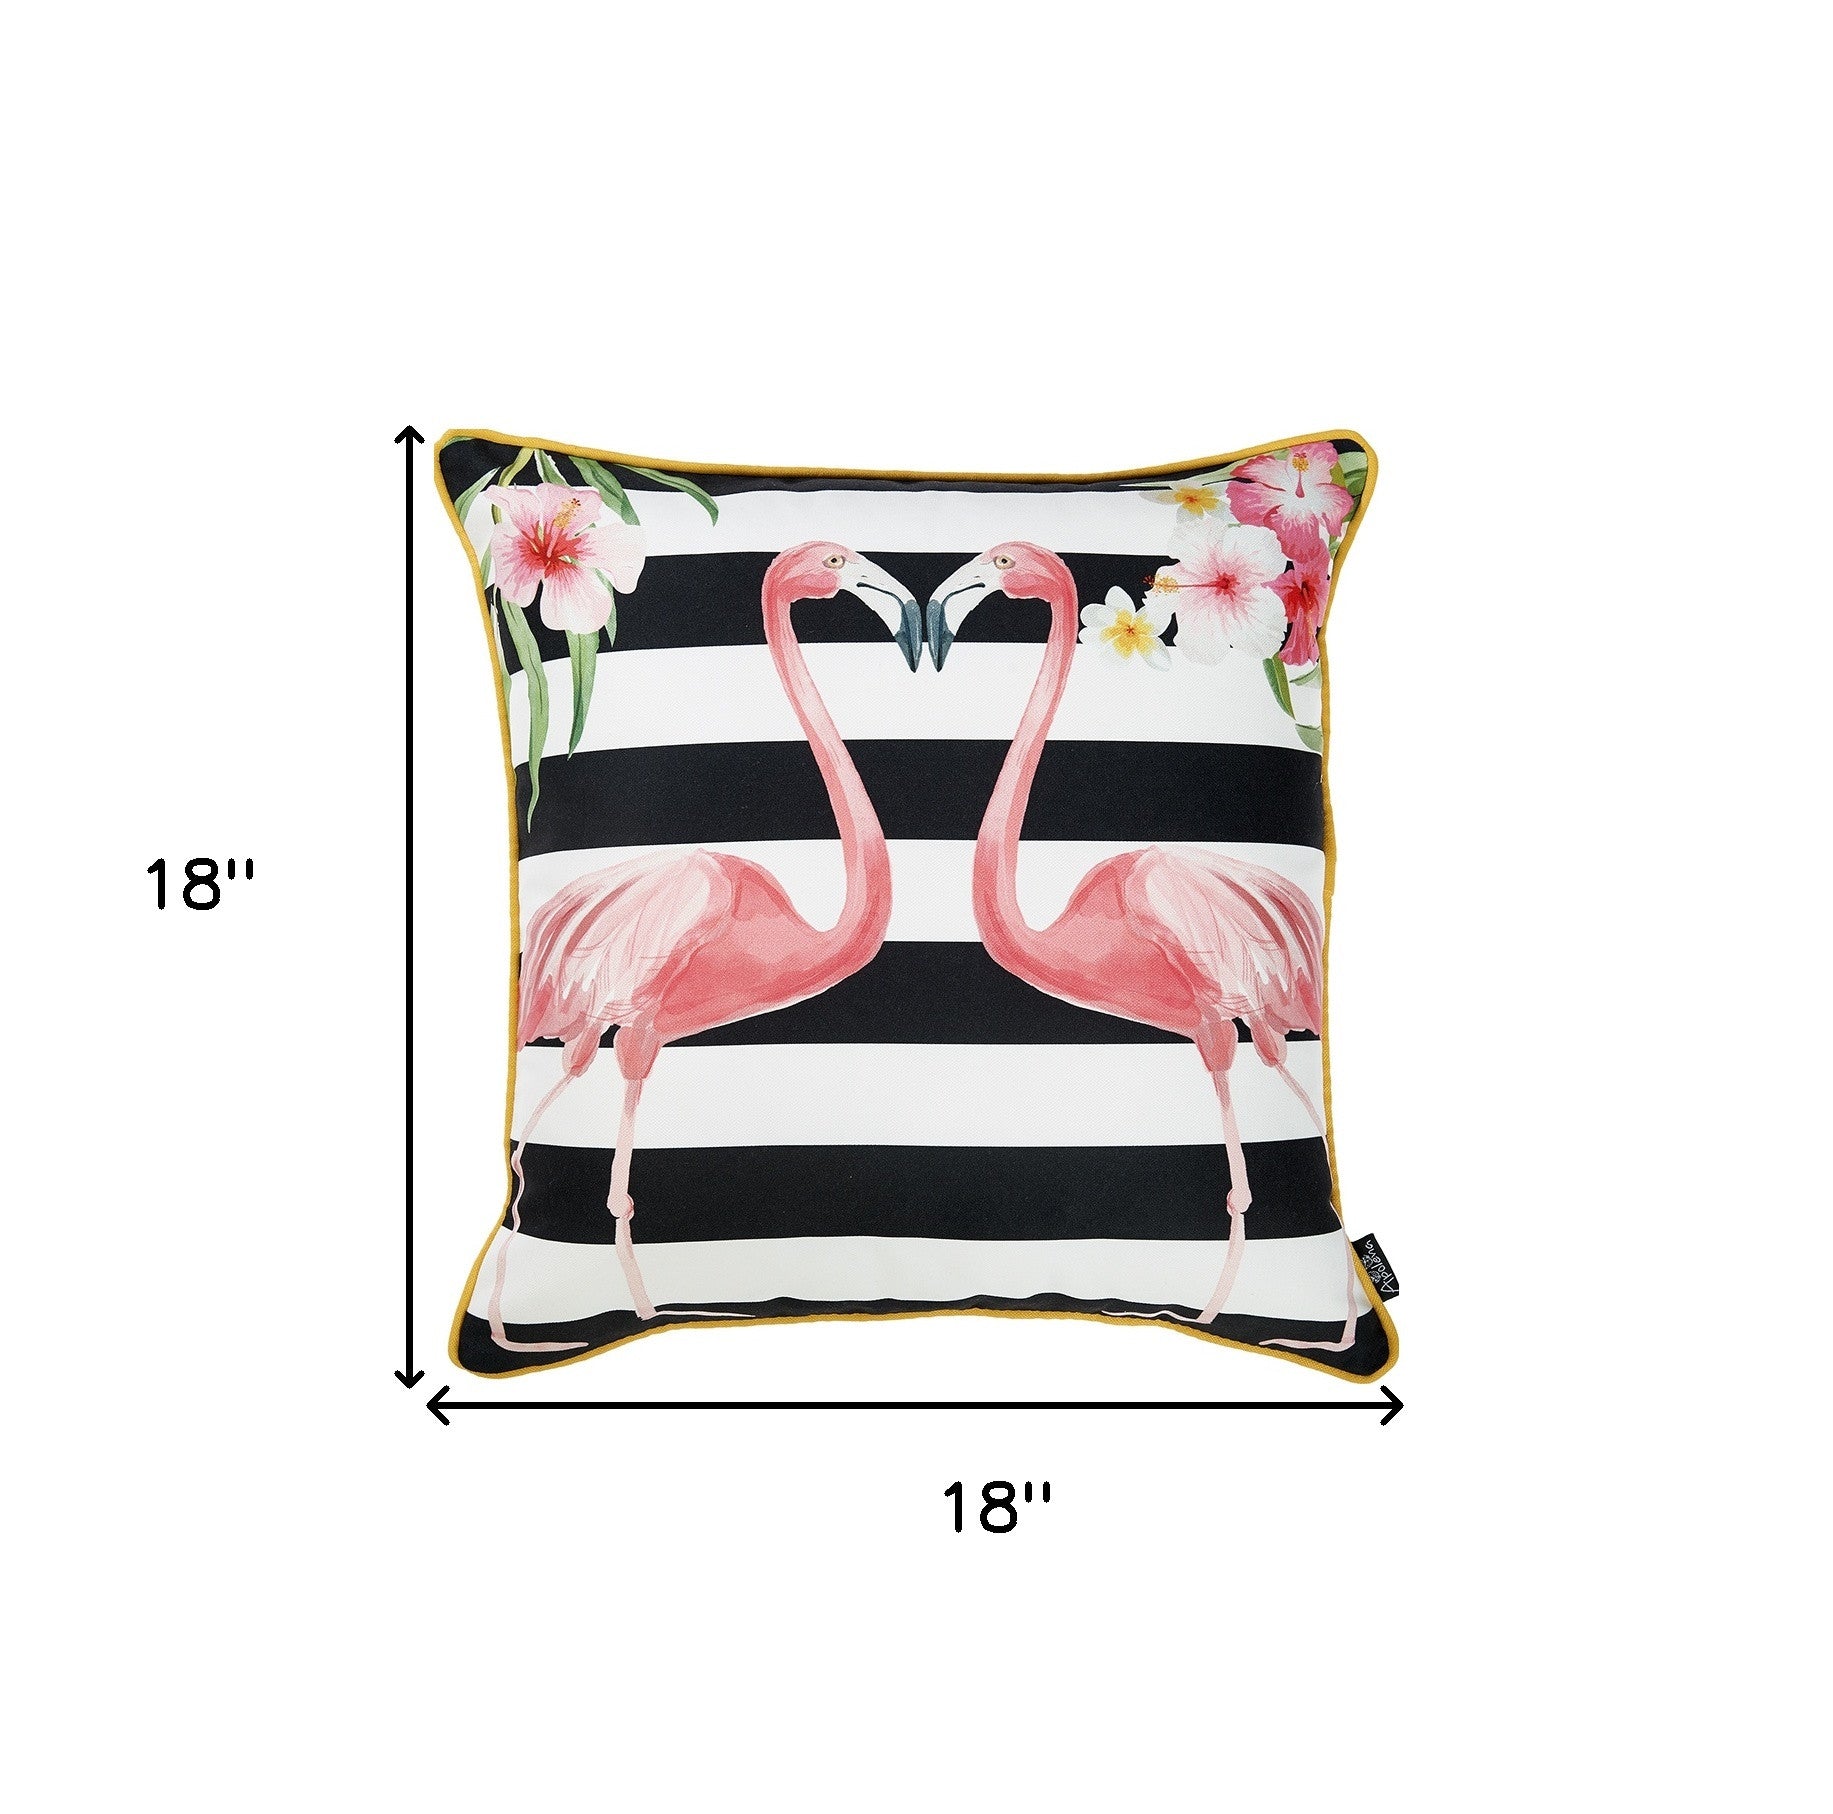 18" Black and White Flamingo Throw Pillow Cover